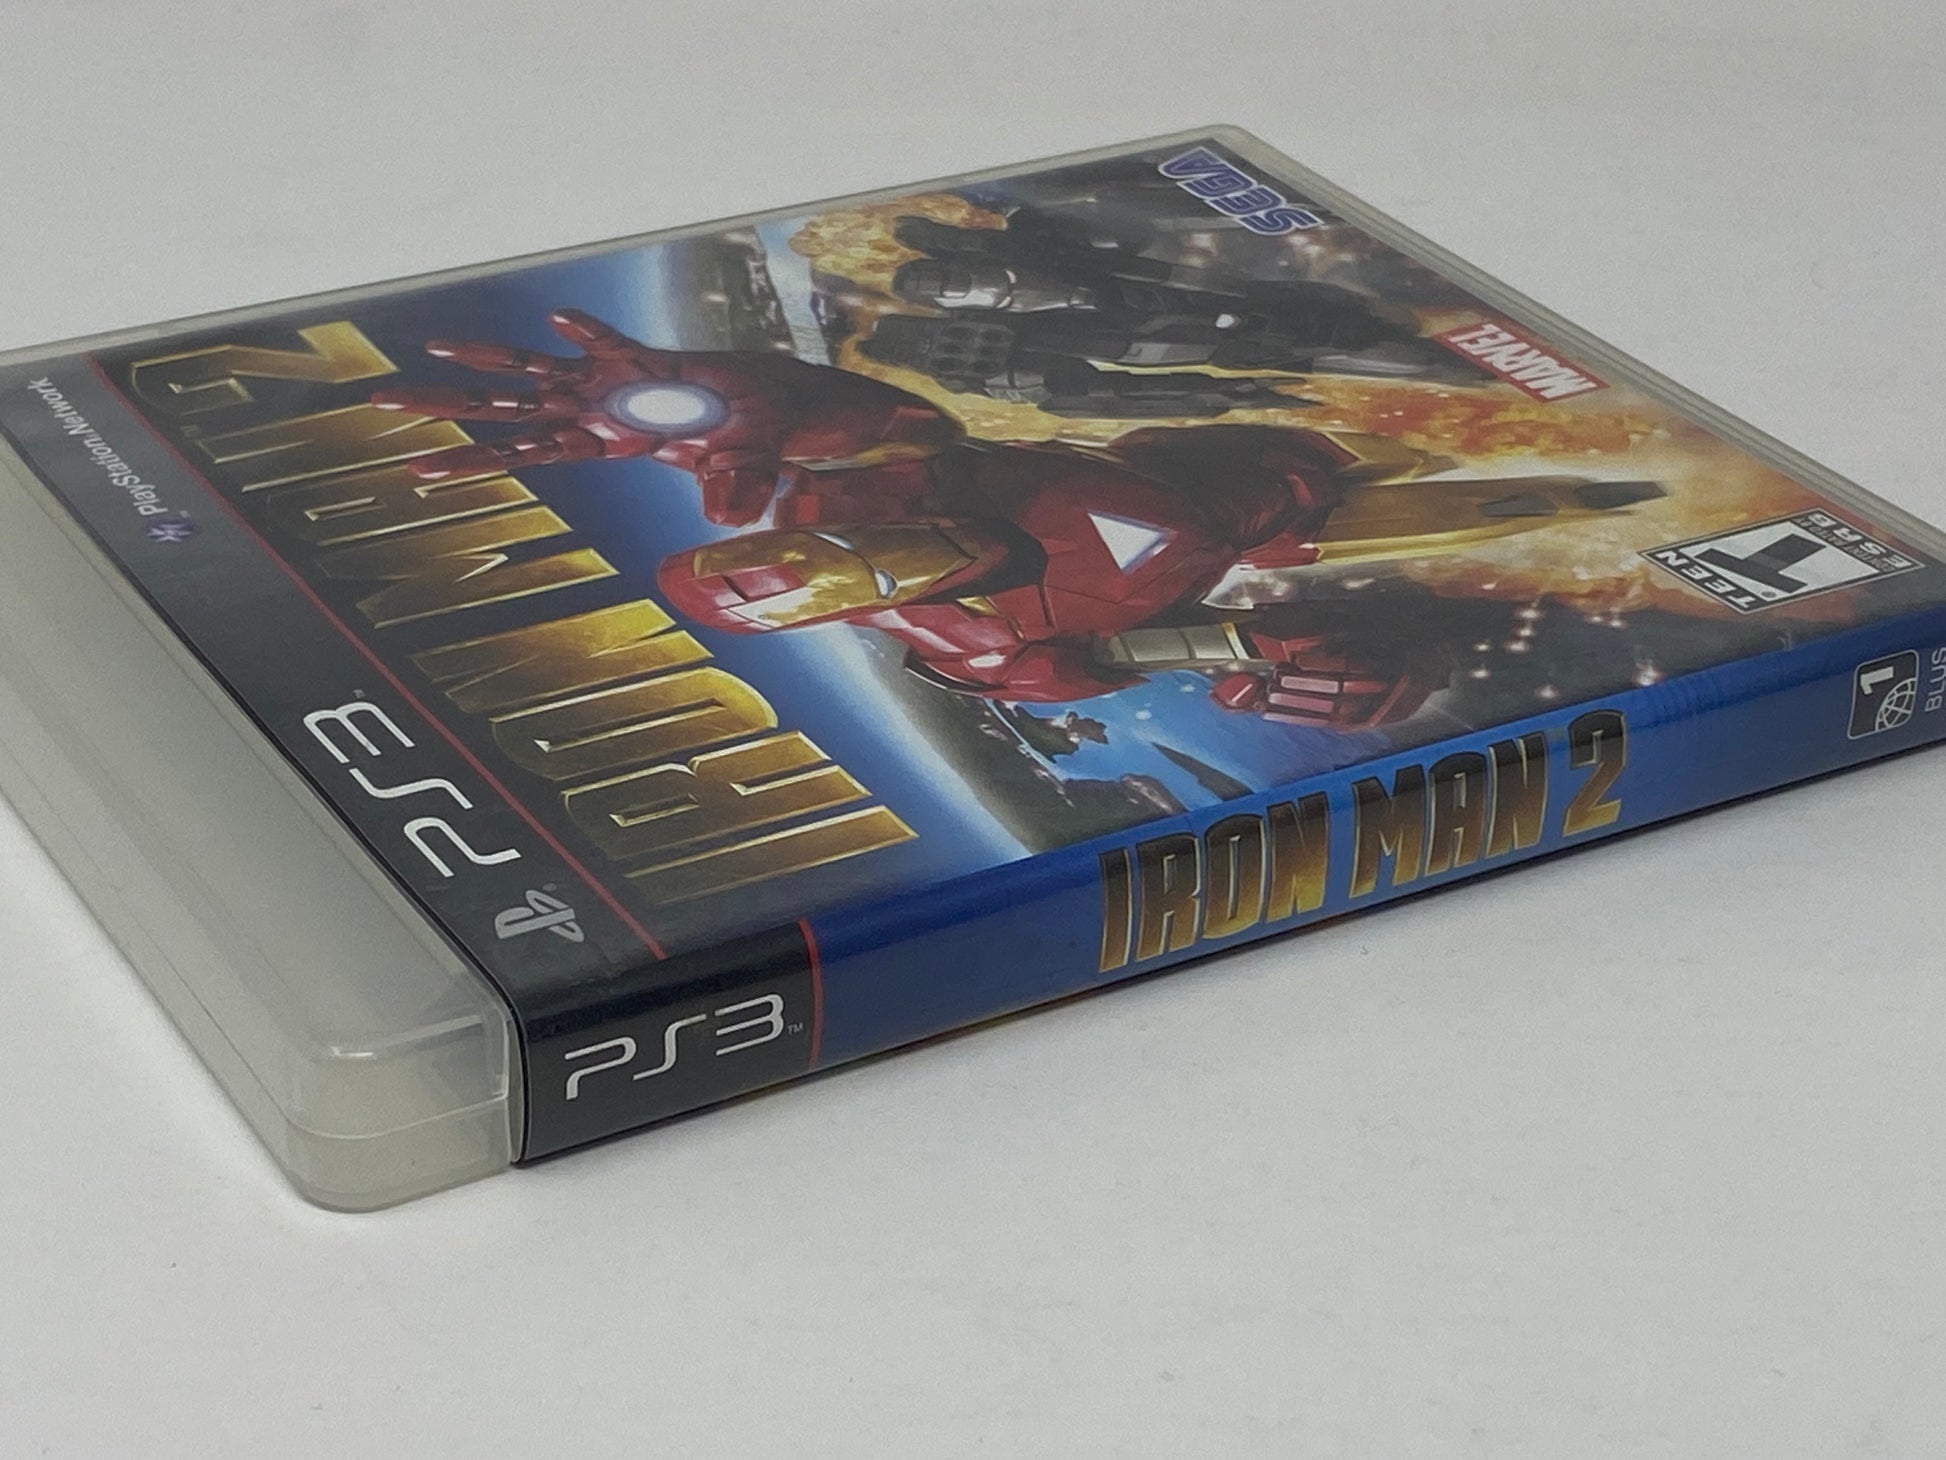 Iron Man - PlayStation 3